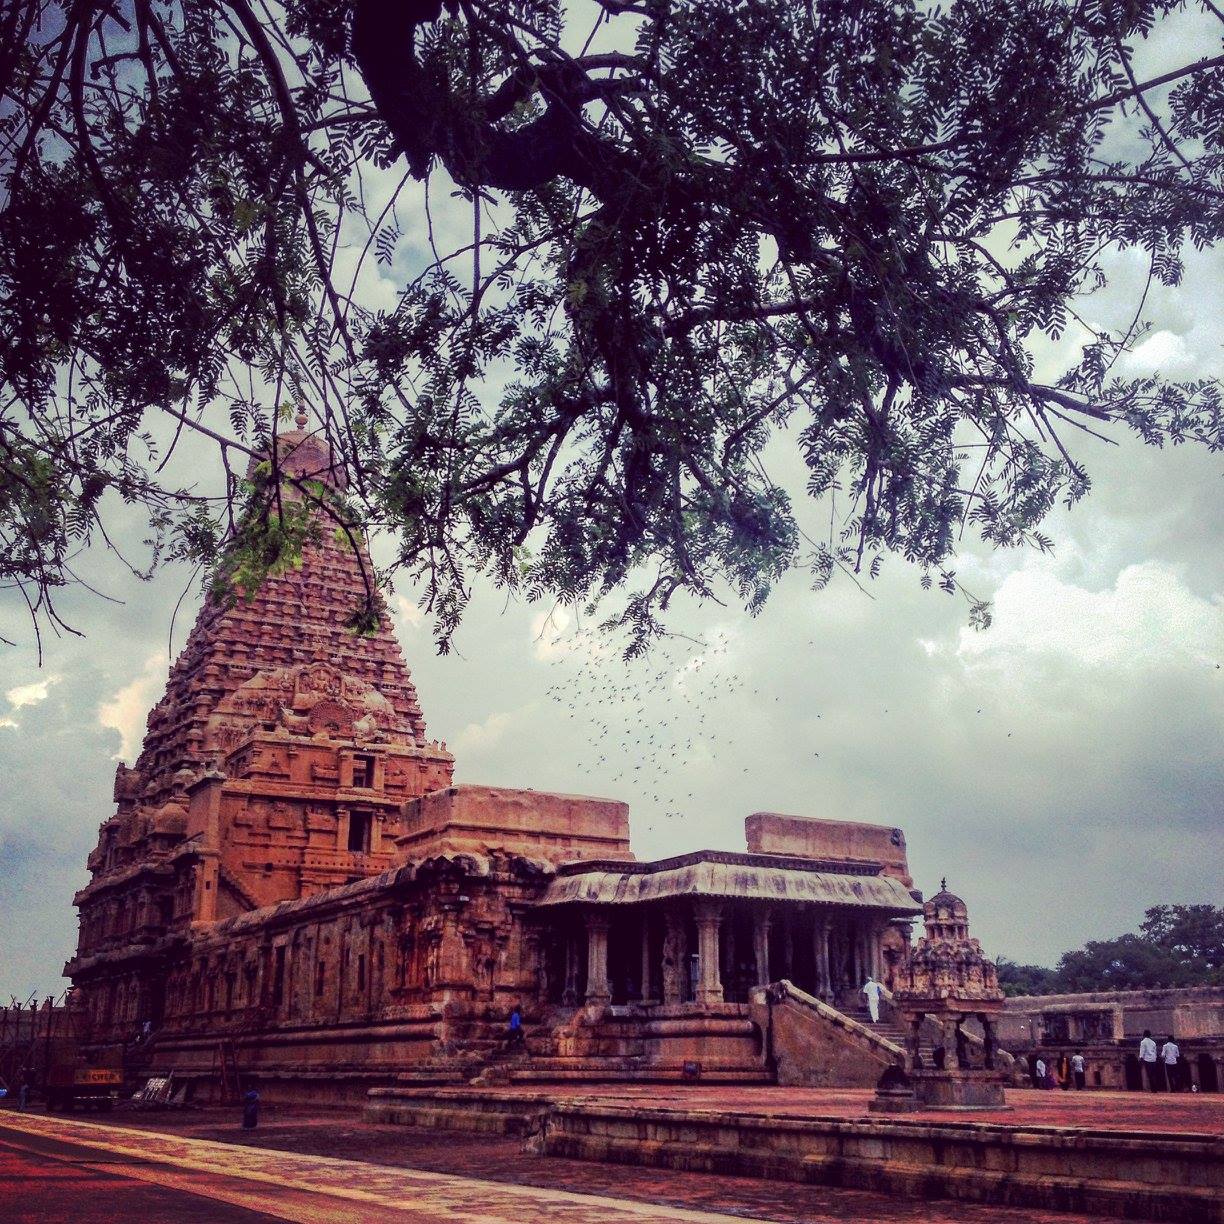 Brihadeeswara temple and trees in thanjavur india